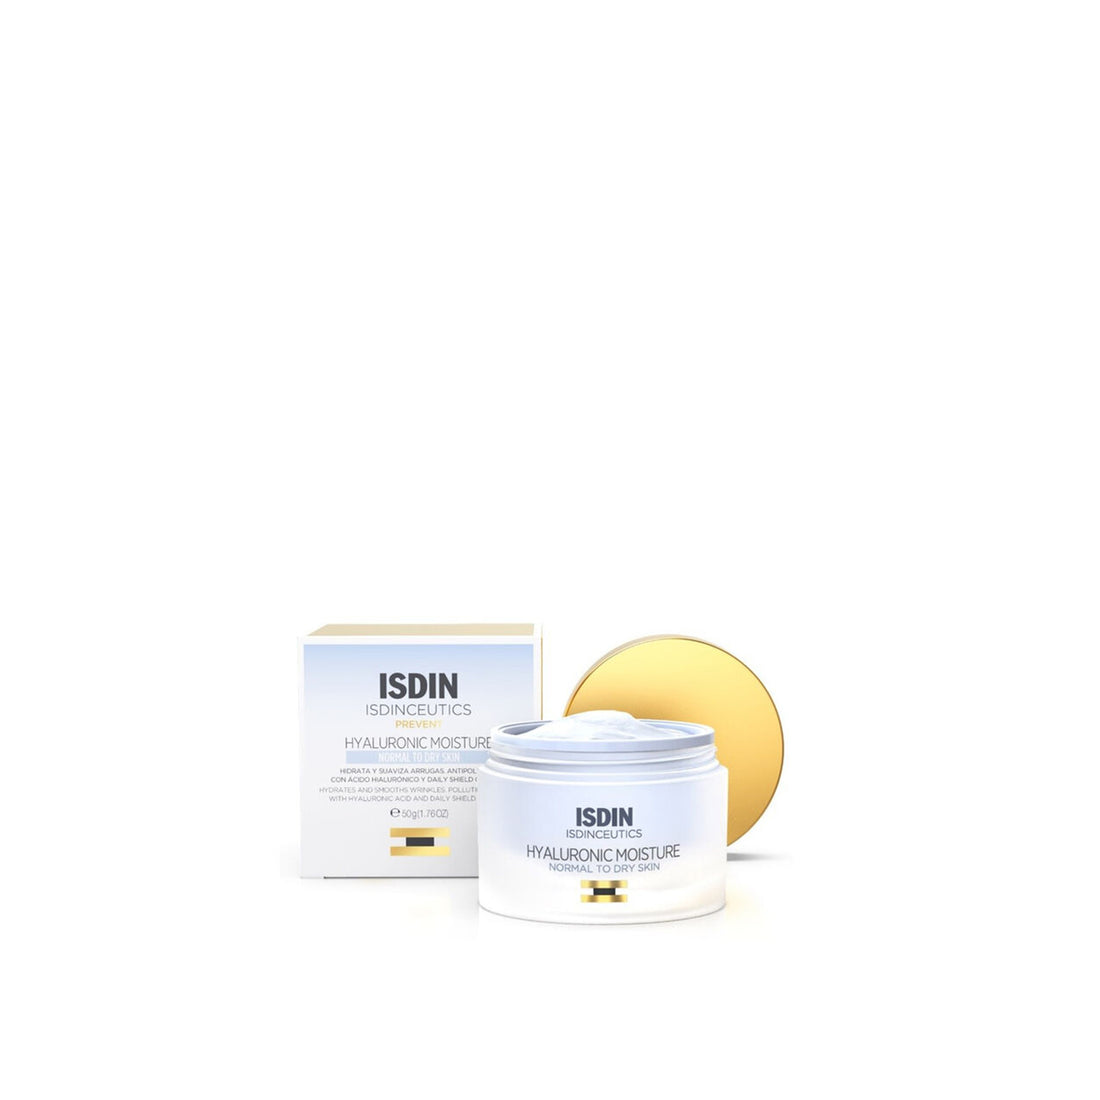 ISDIN ISDINCEUTICS Hyaluronic Moisture Cream Normal To Dry Skin 50g